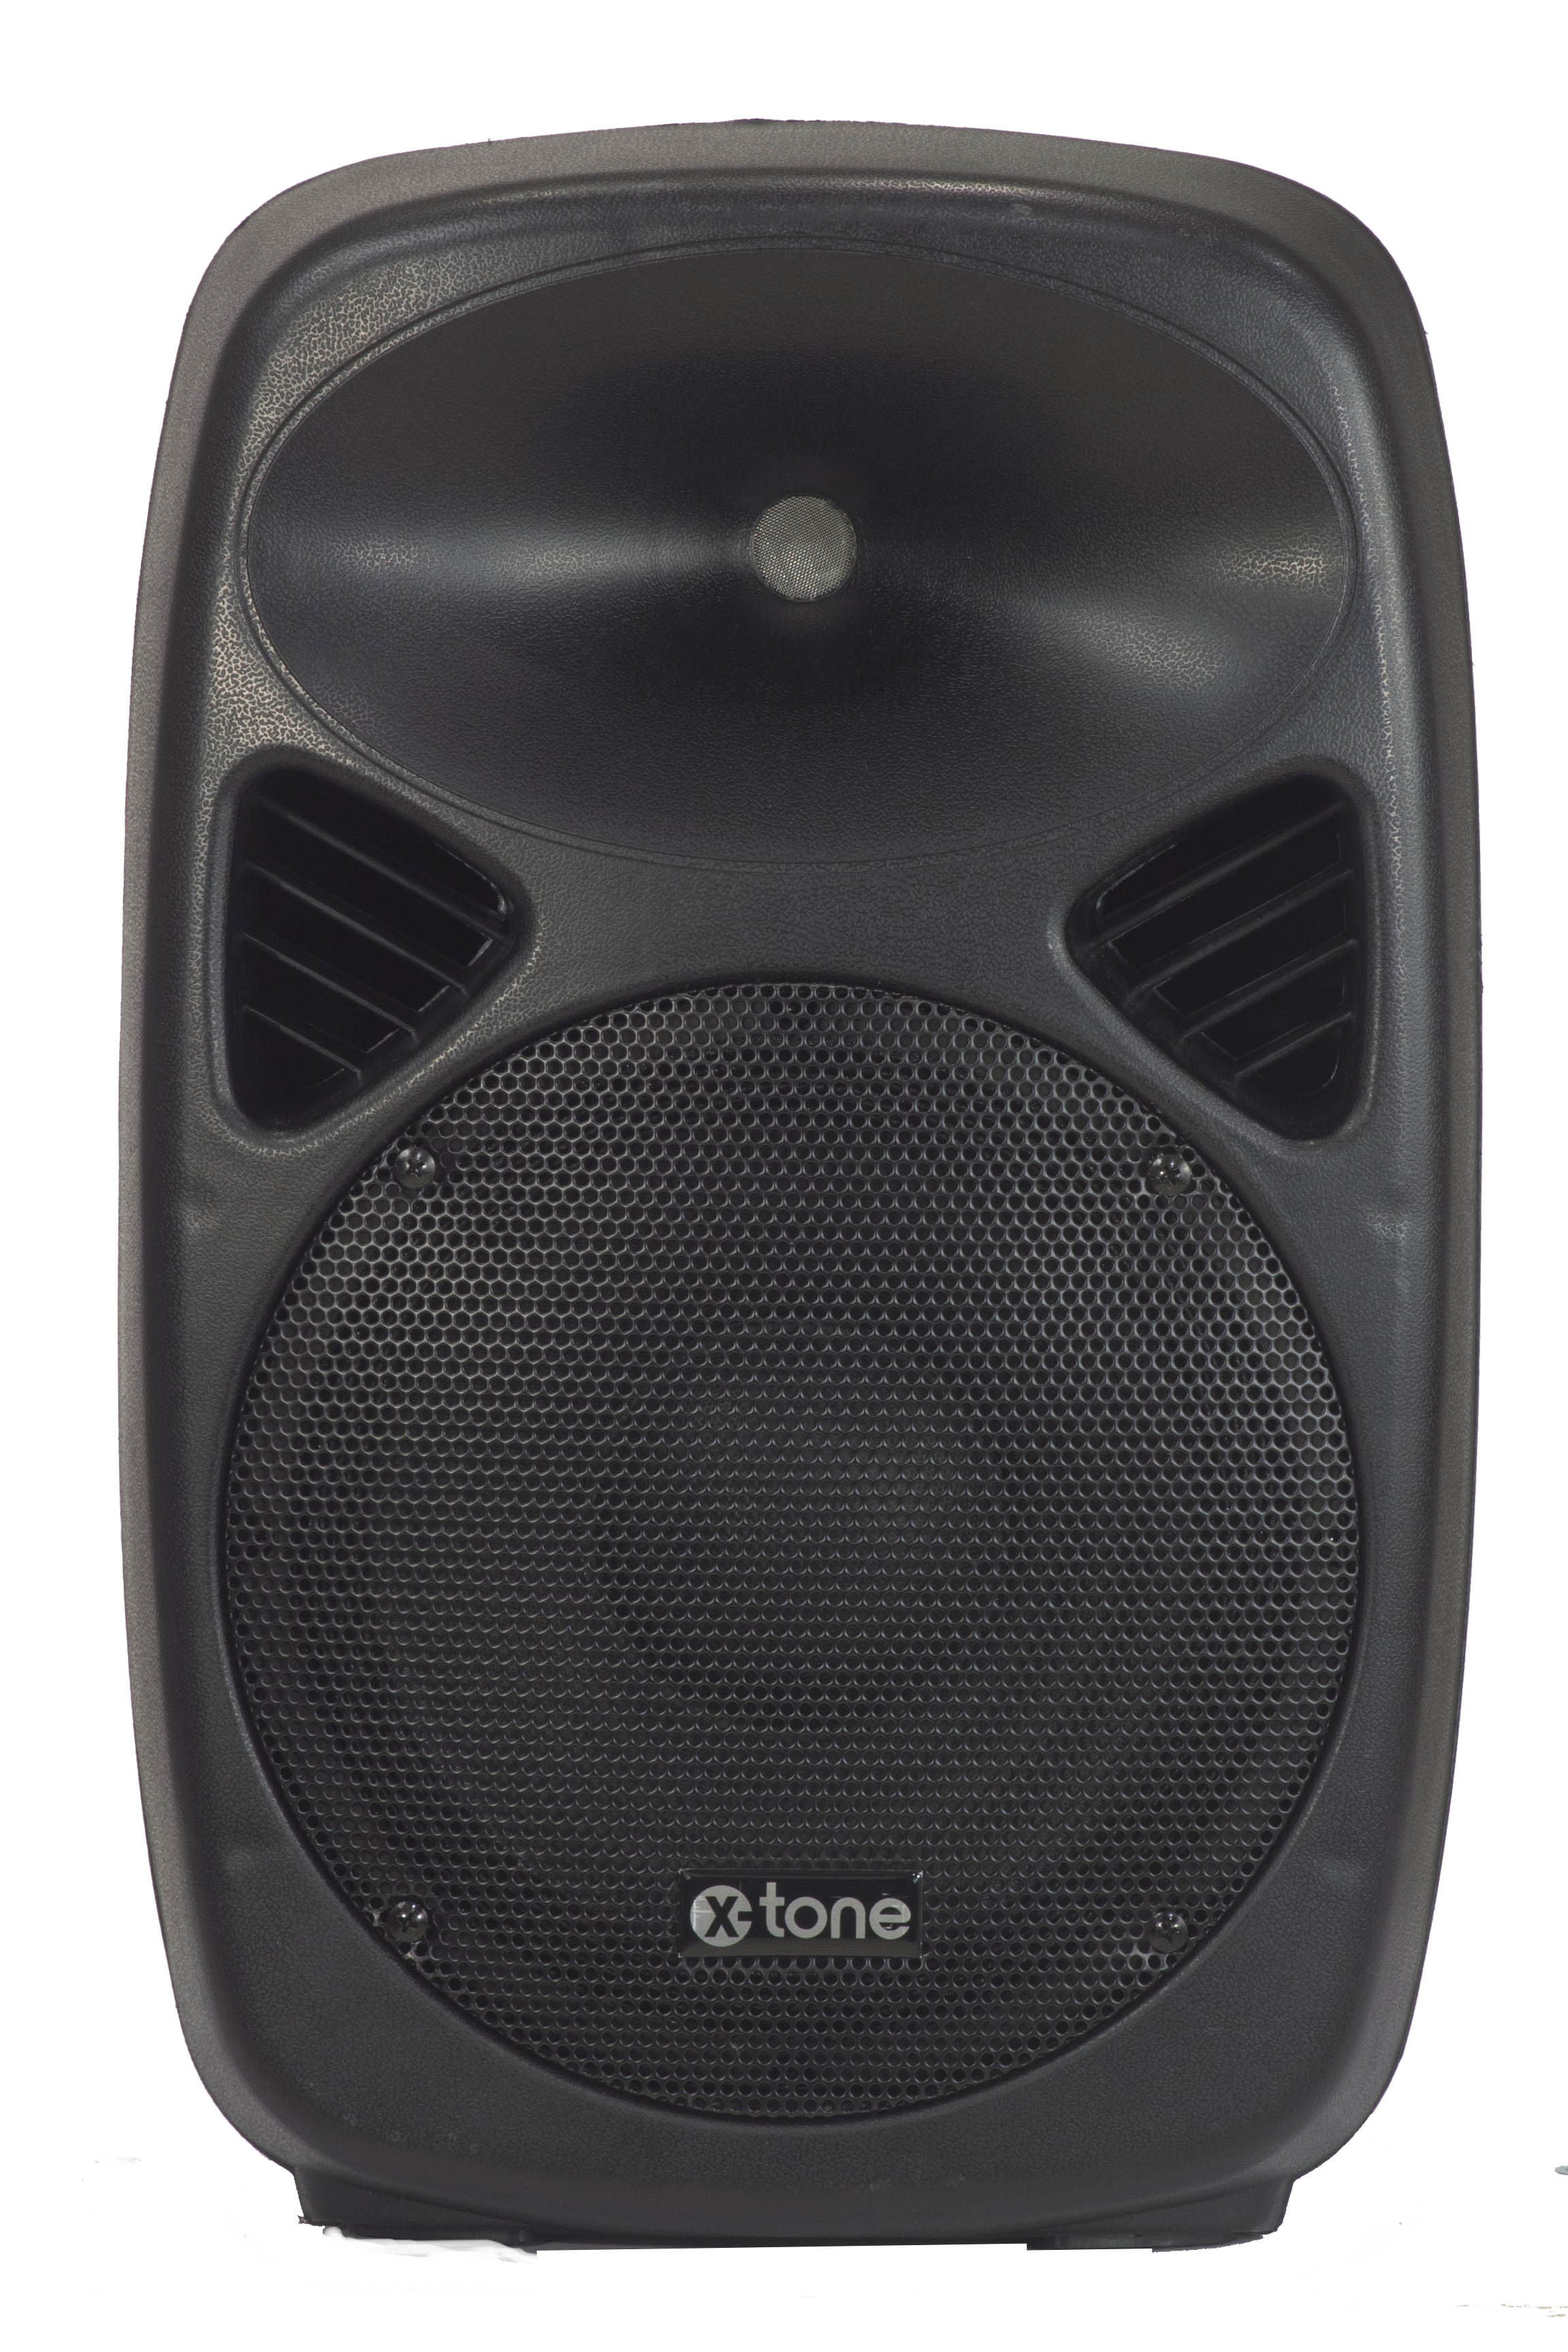 X-tone Sma-8 - Actieve luidspreker - Variation 2